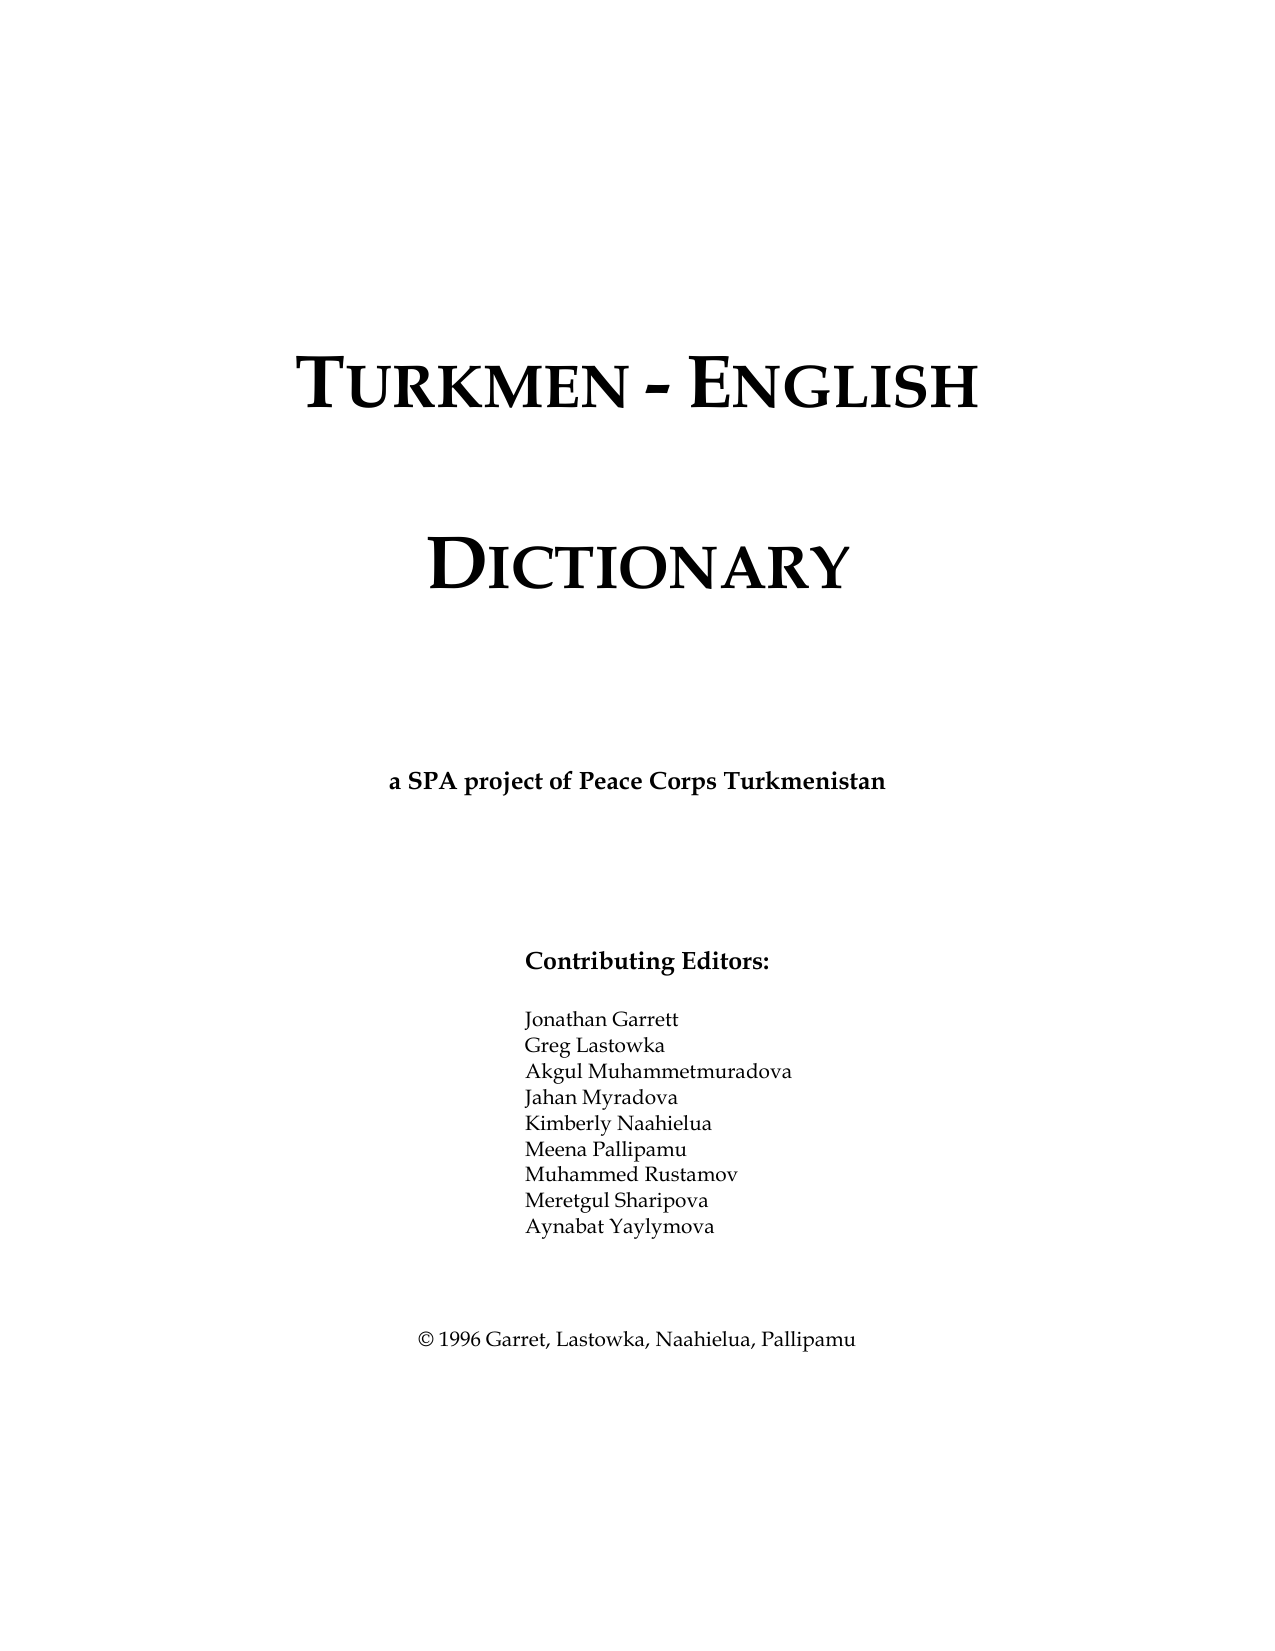 TURKMEN - ENGLISH